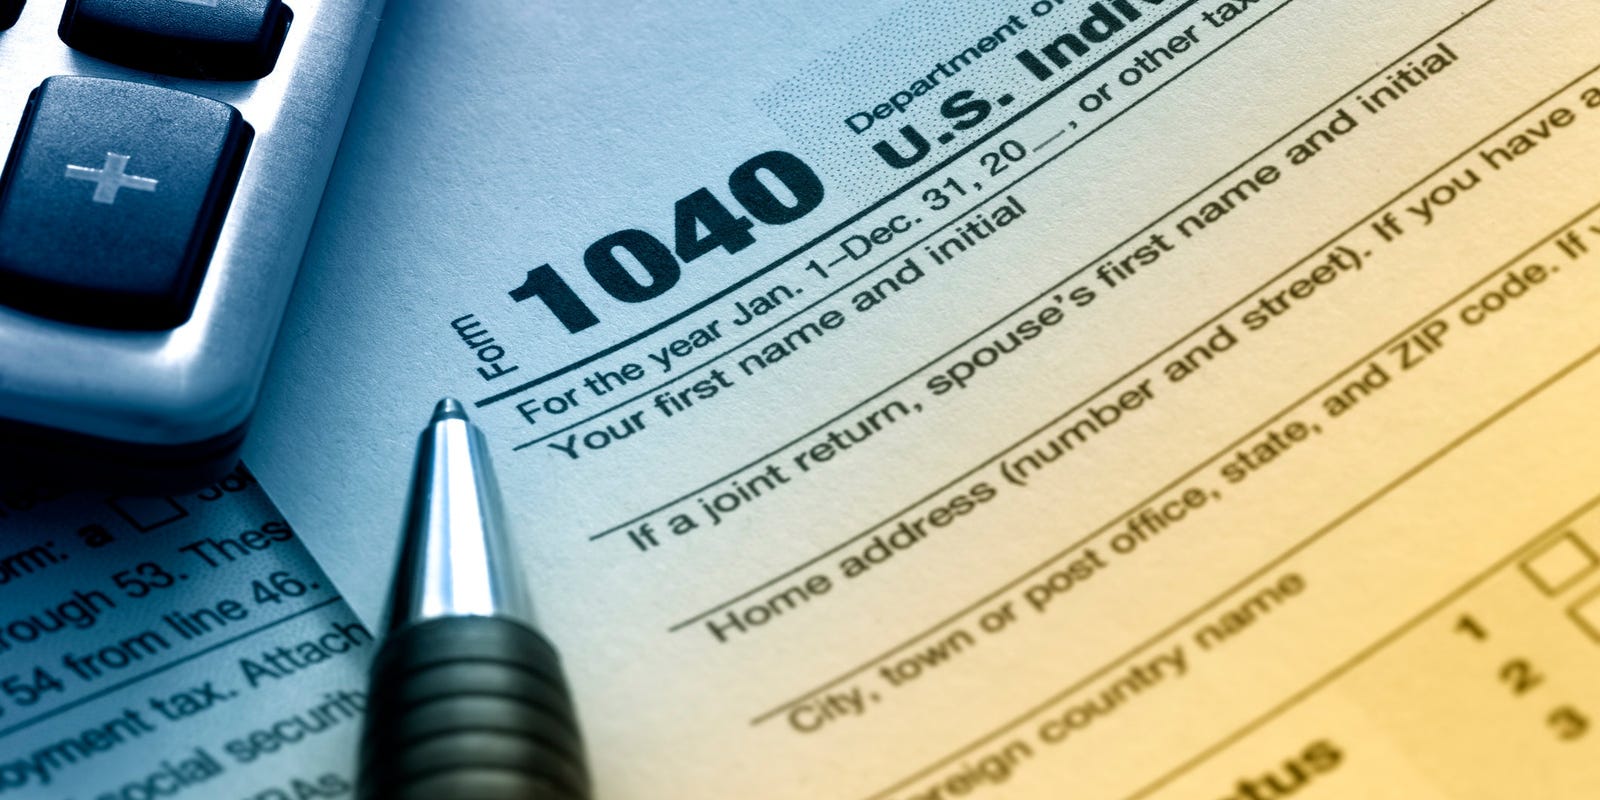 Taxes 2020 IRS says it will accept tax returns starting Jan. 27